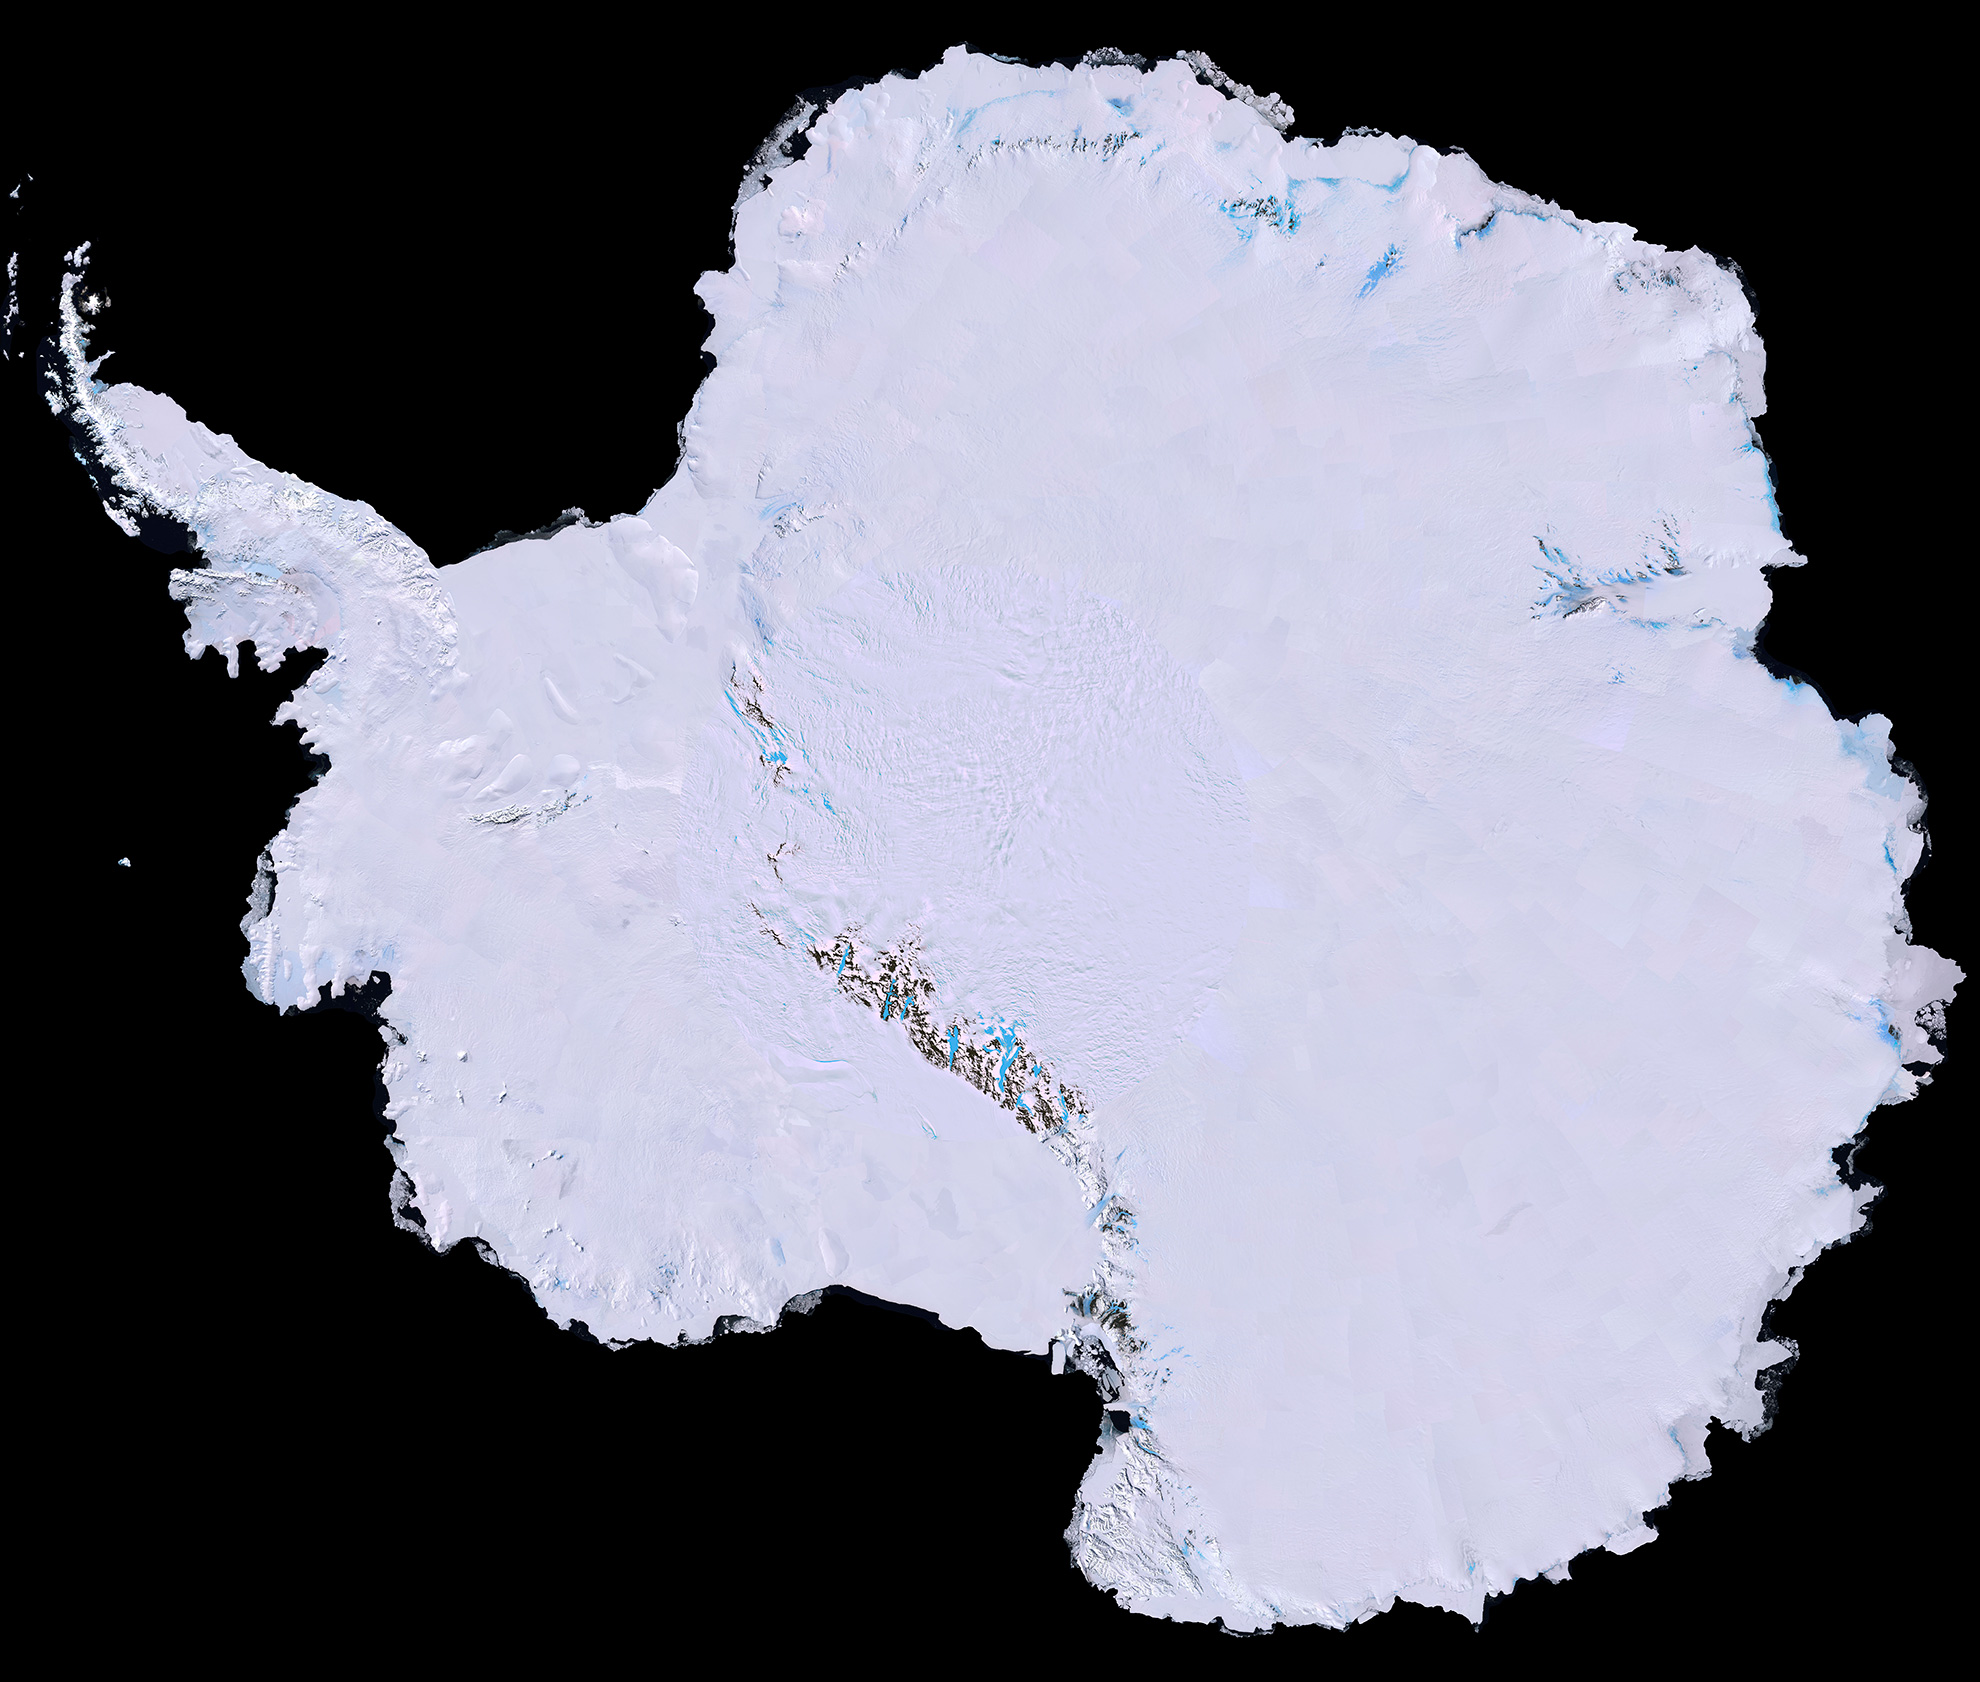 Landsat Image Mosaic of Antarctica